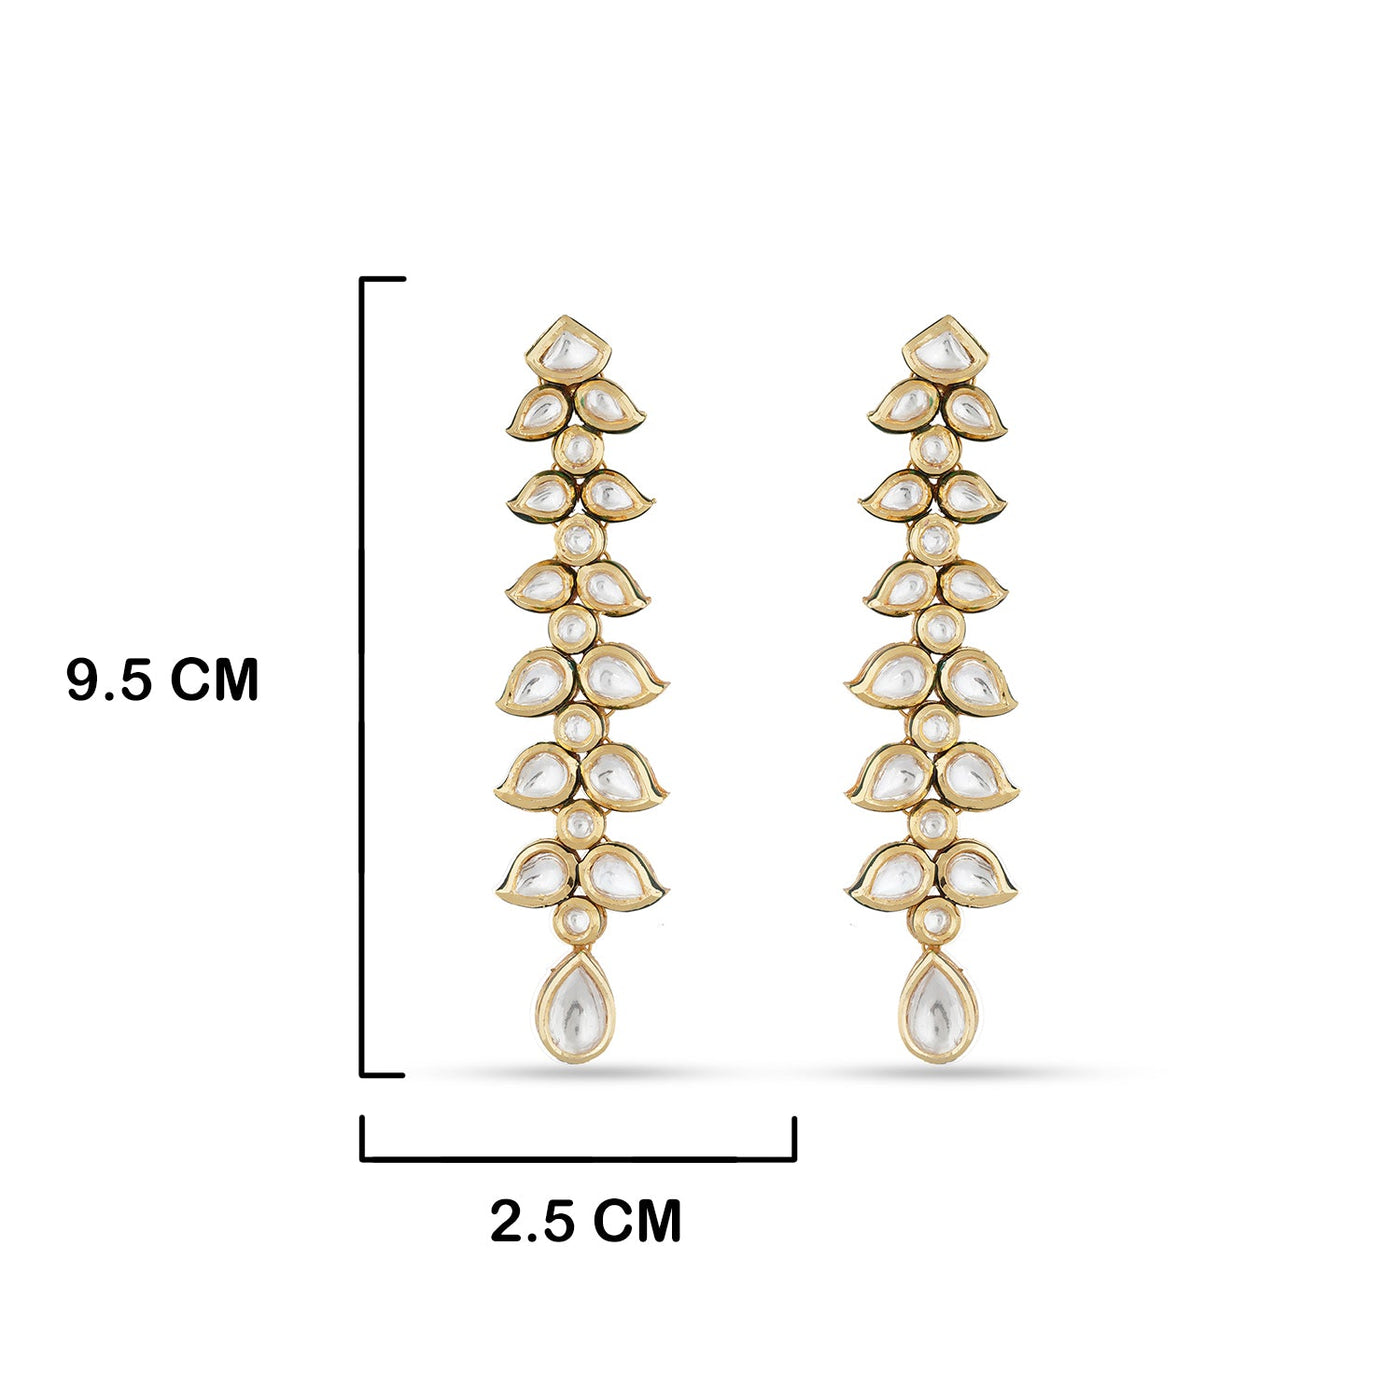  Kundan Long Earrings with measurements in cm. 9.5cm by 2.5cm.